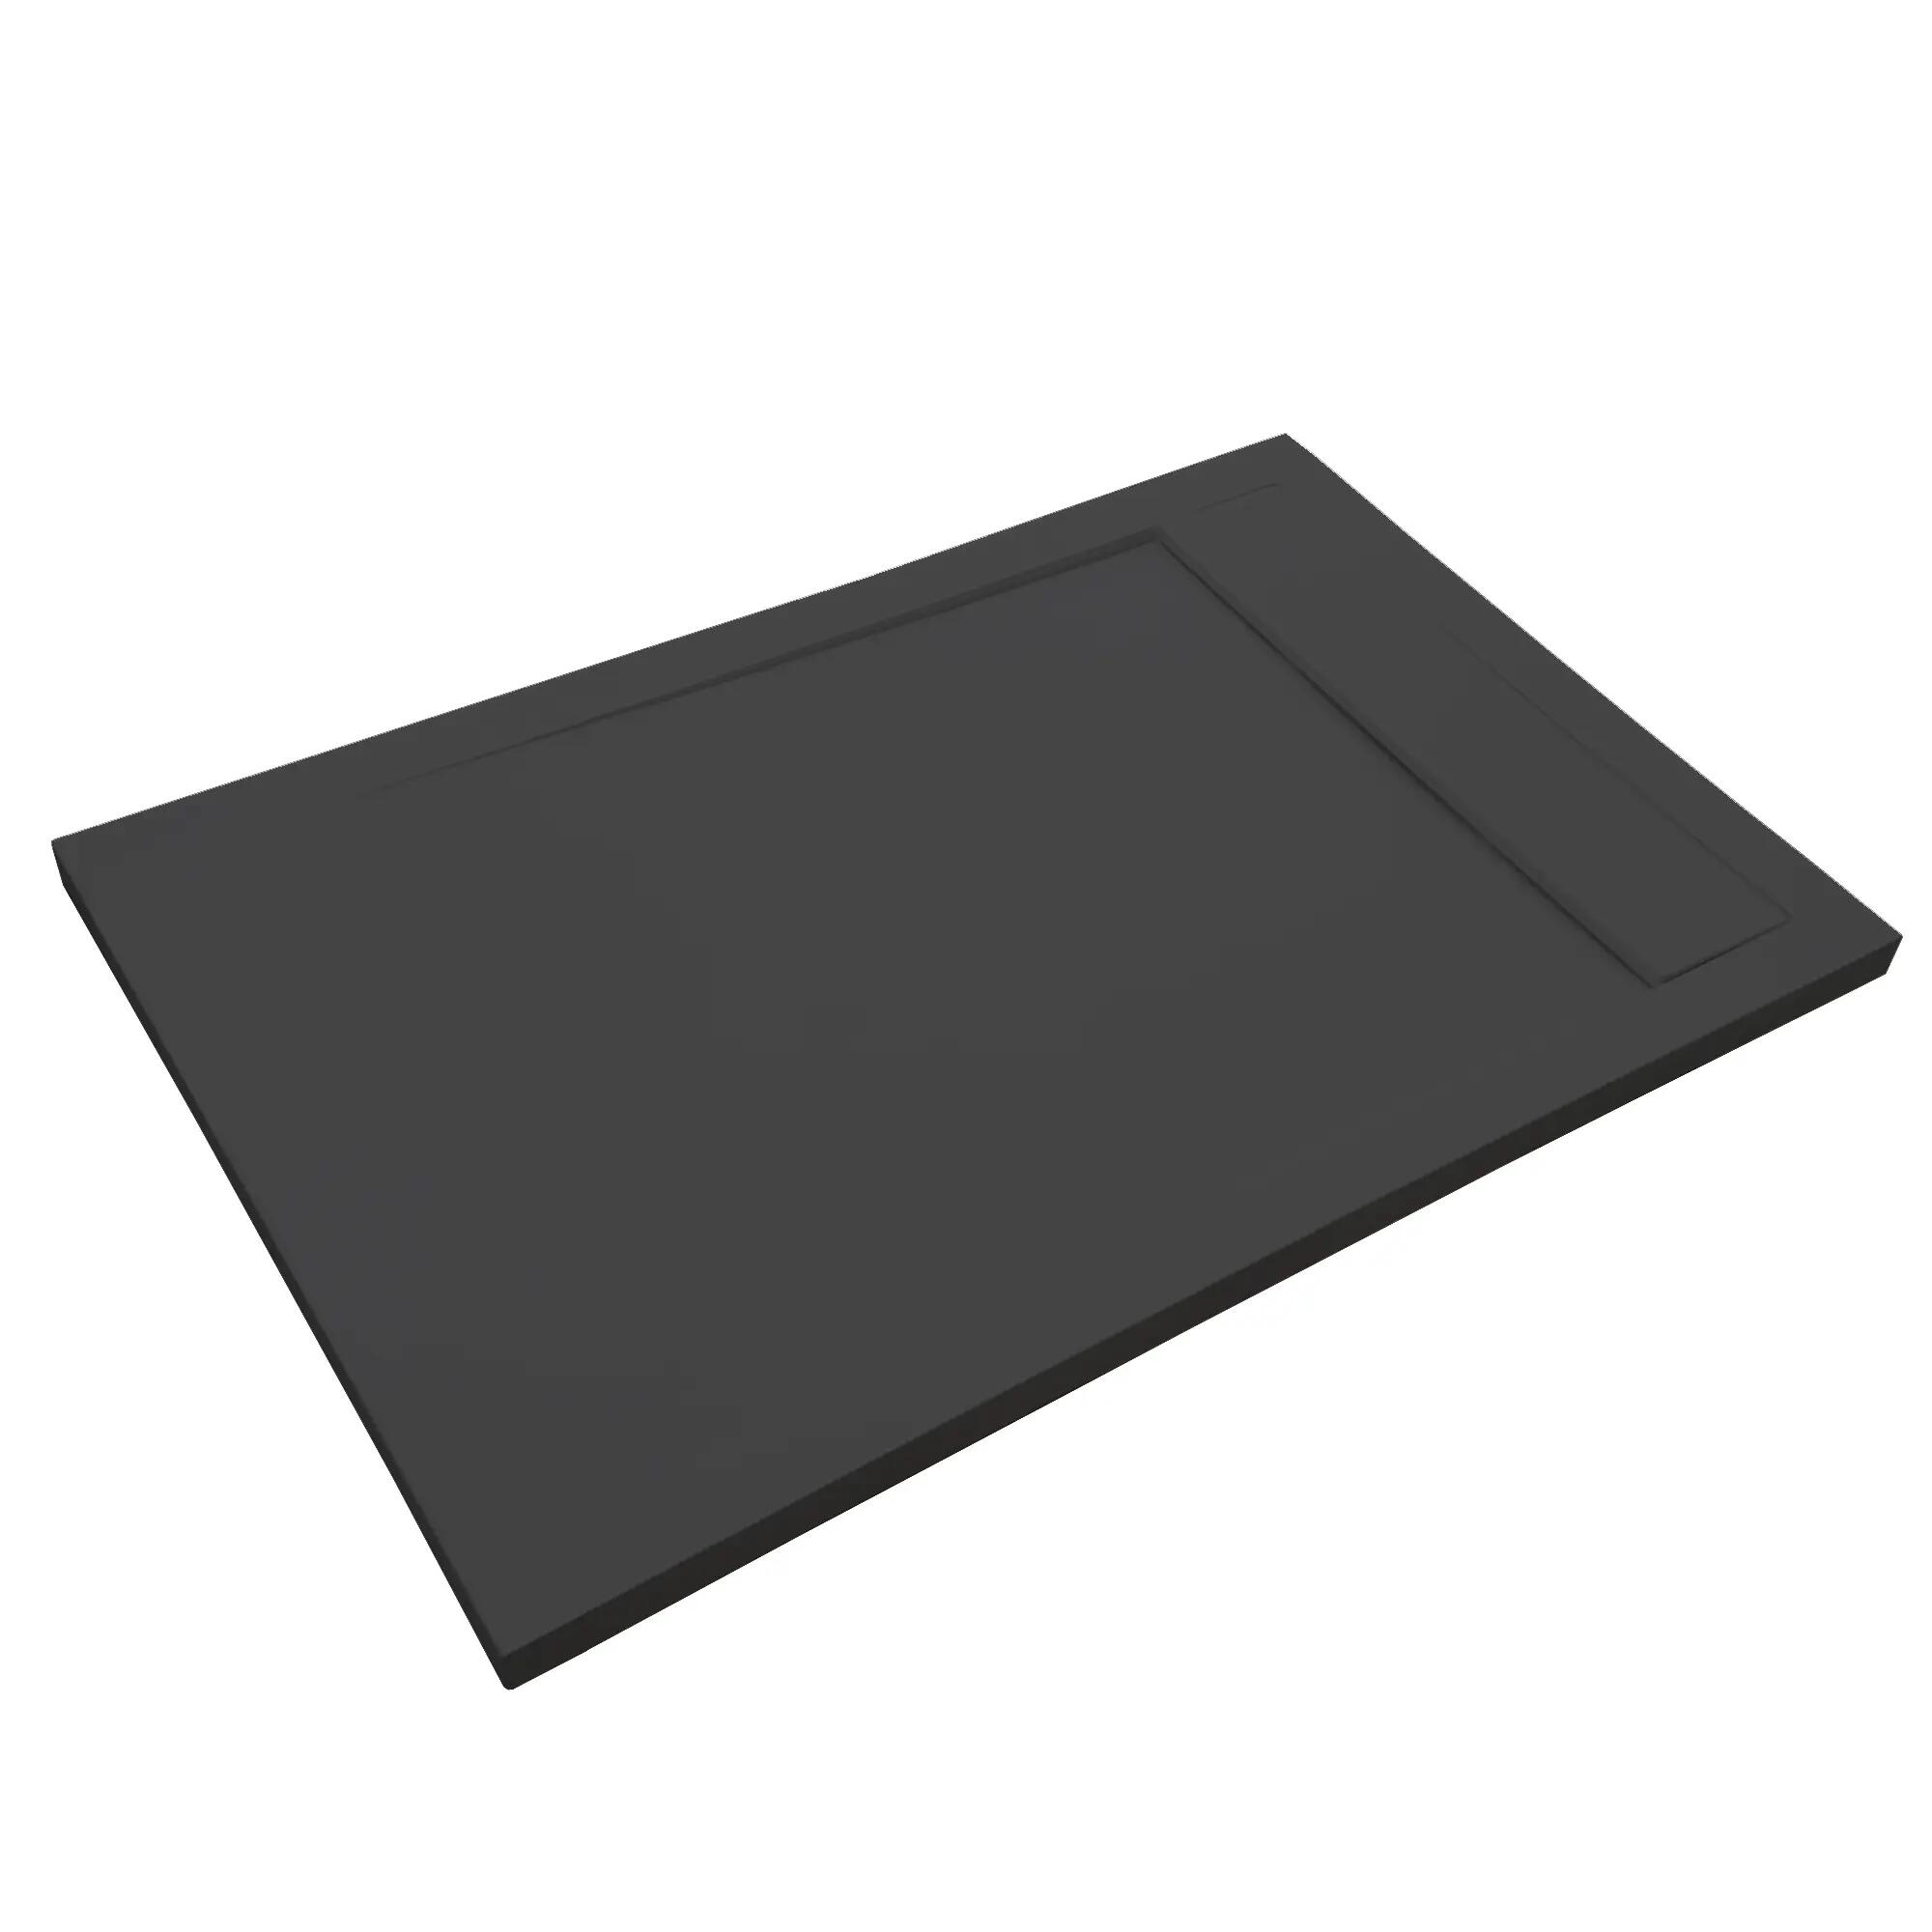 Plato de ducha new york 160x70 cm negro